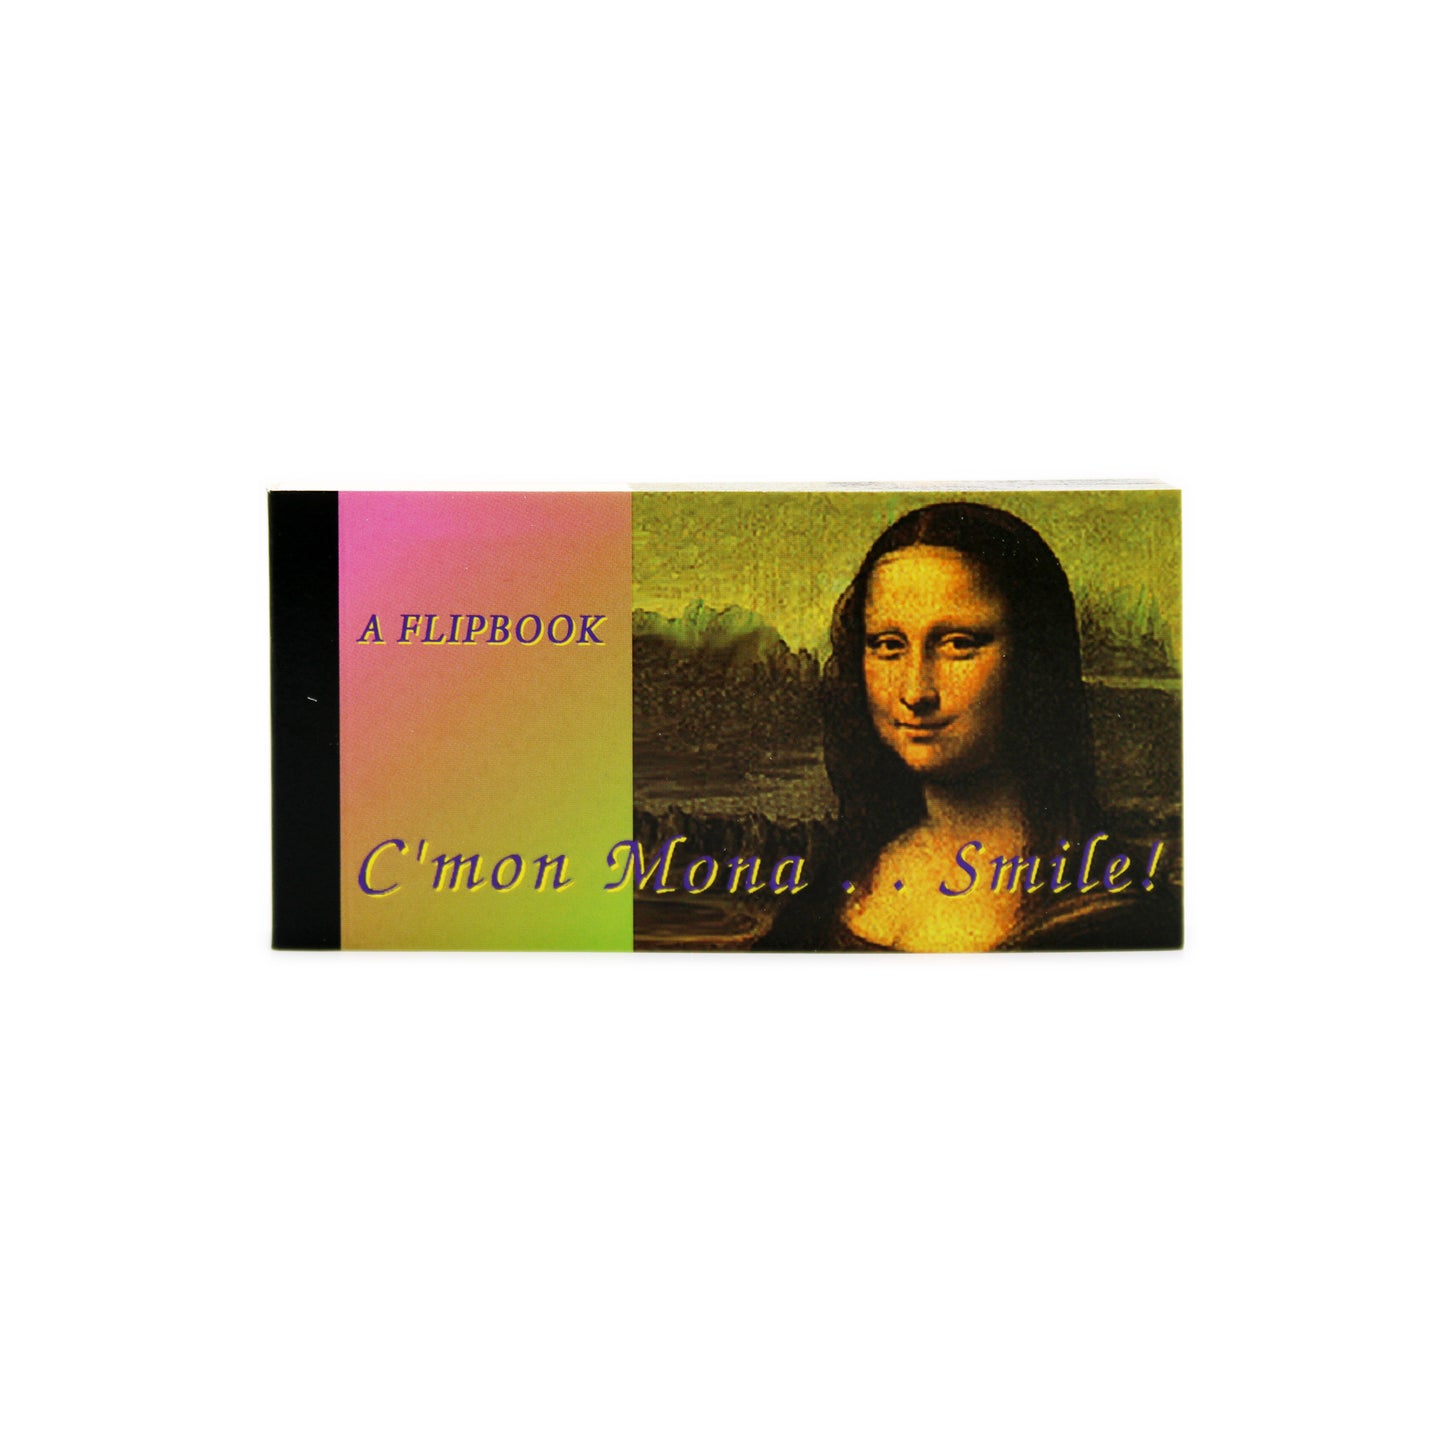 C'mon Mona... Smile!: A Flipbook